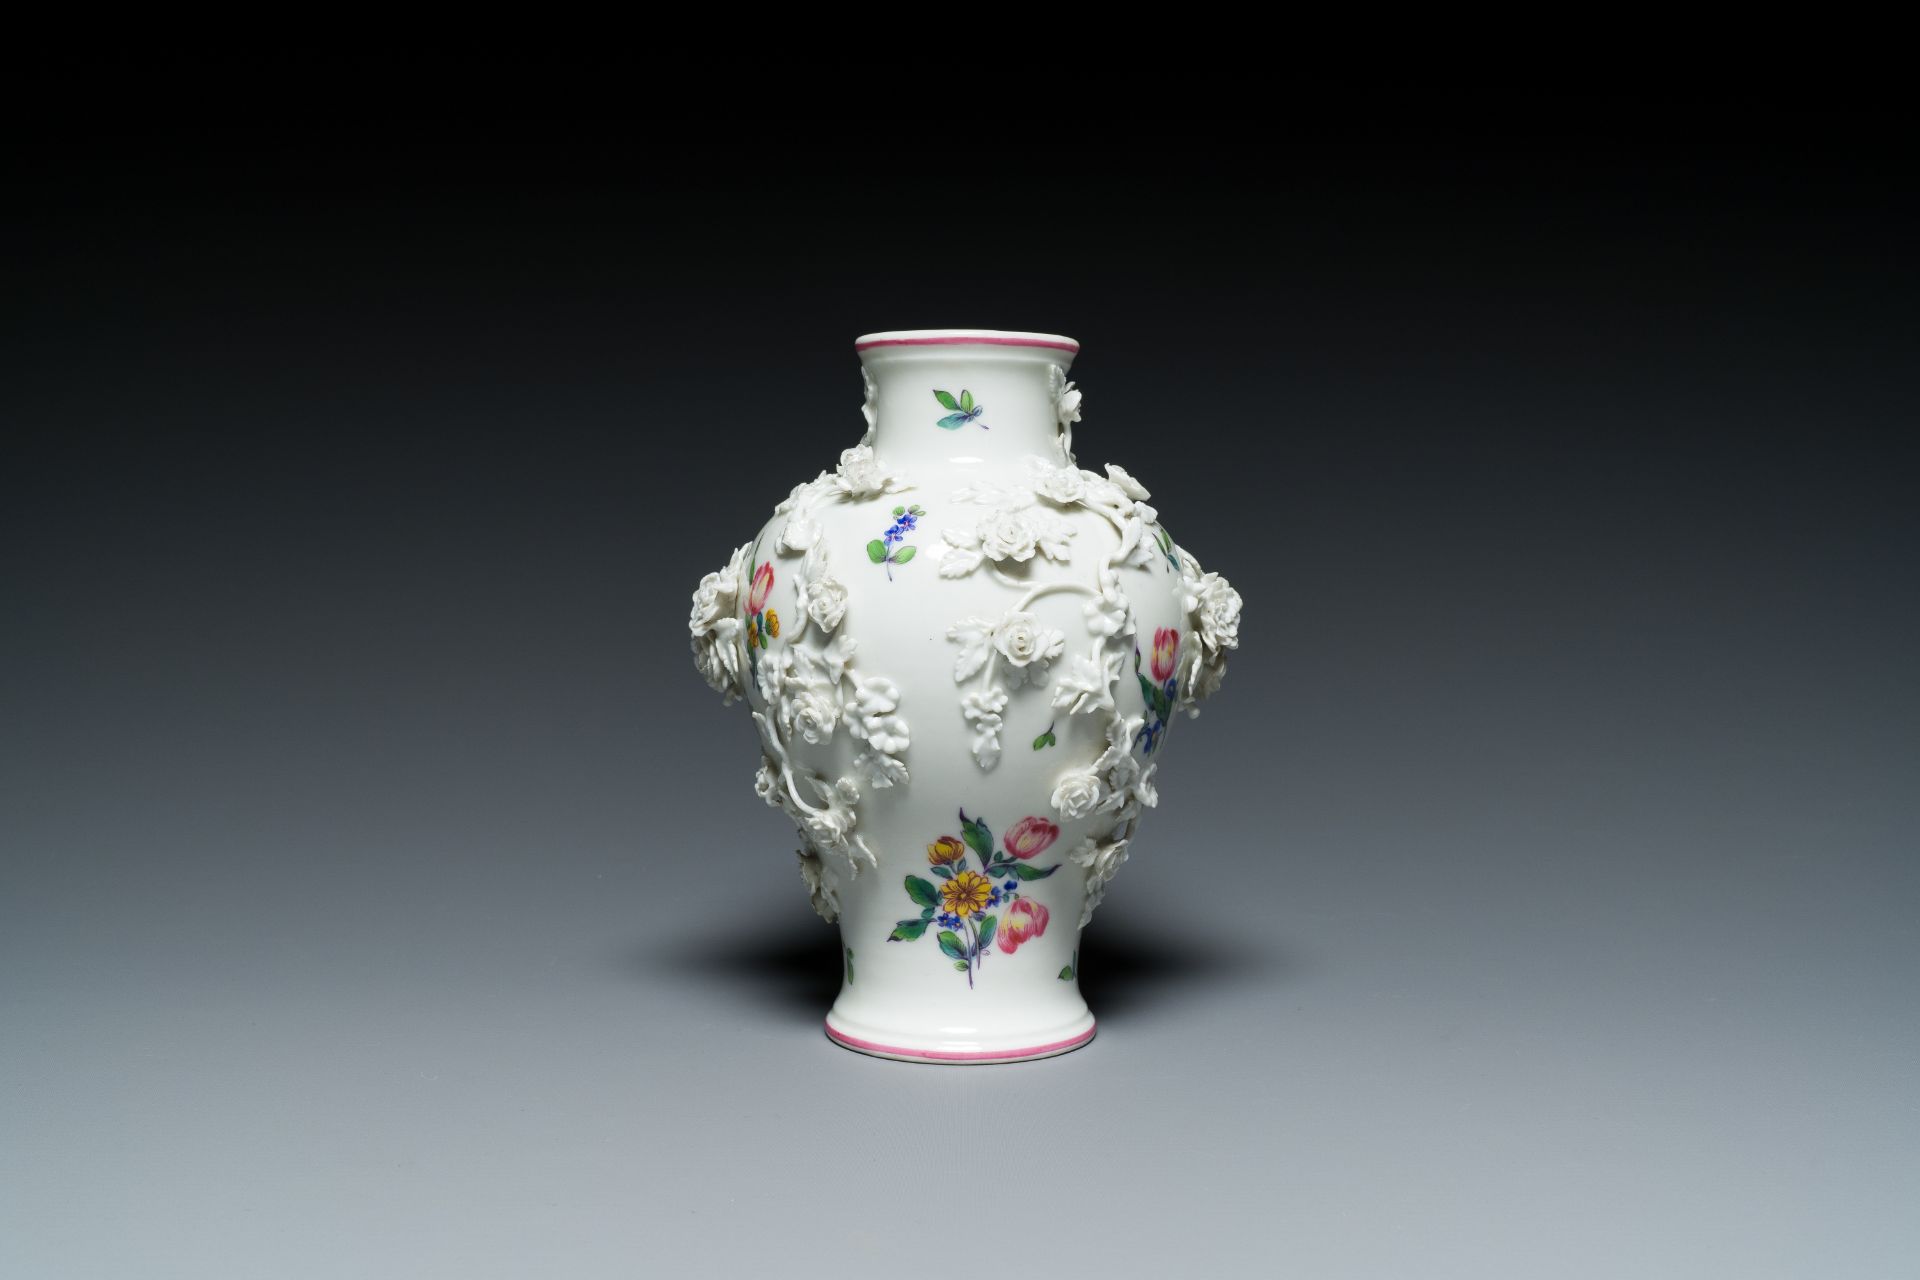 A Mennecy vase with applied floral design, France, DV mark, 18th C. - Image 8 of 16